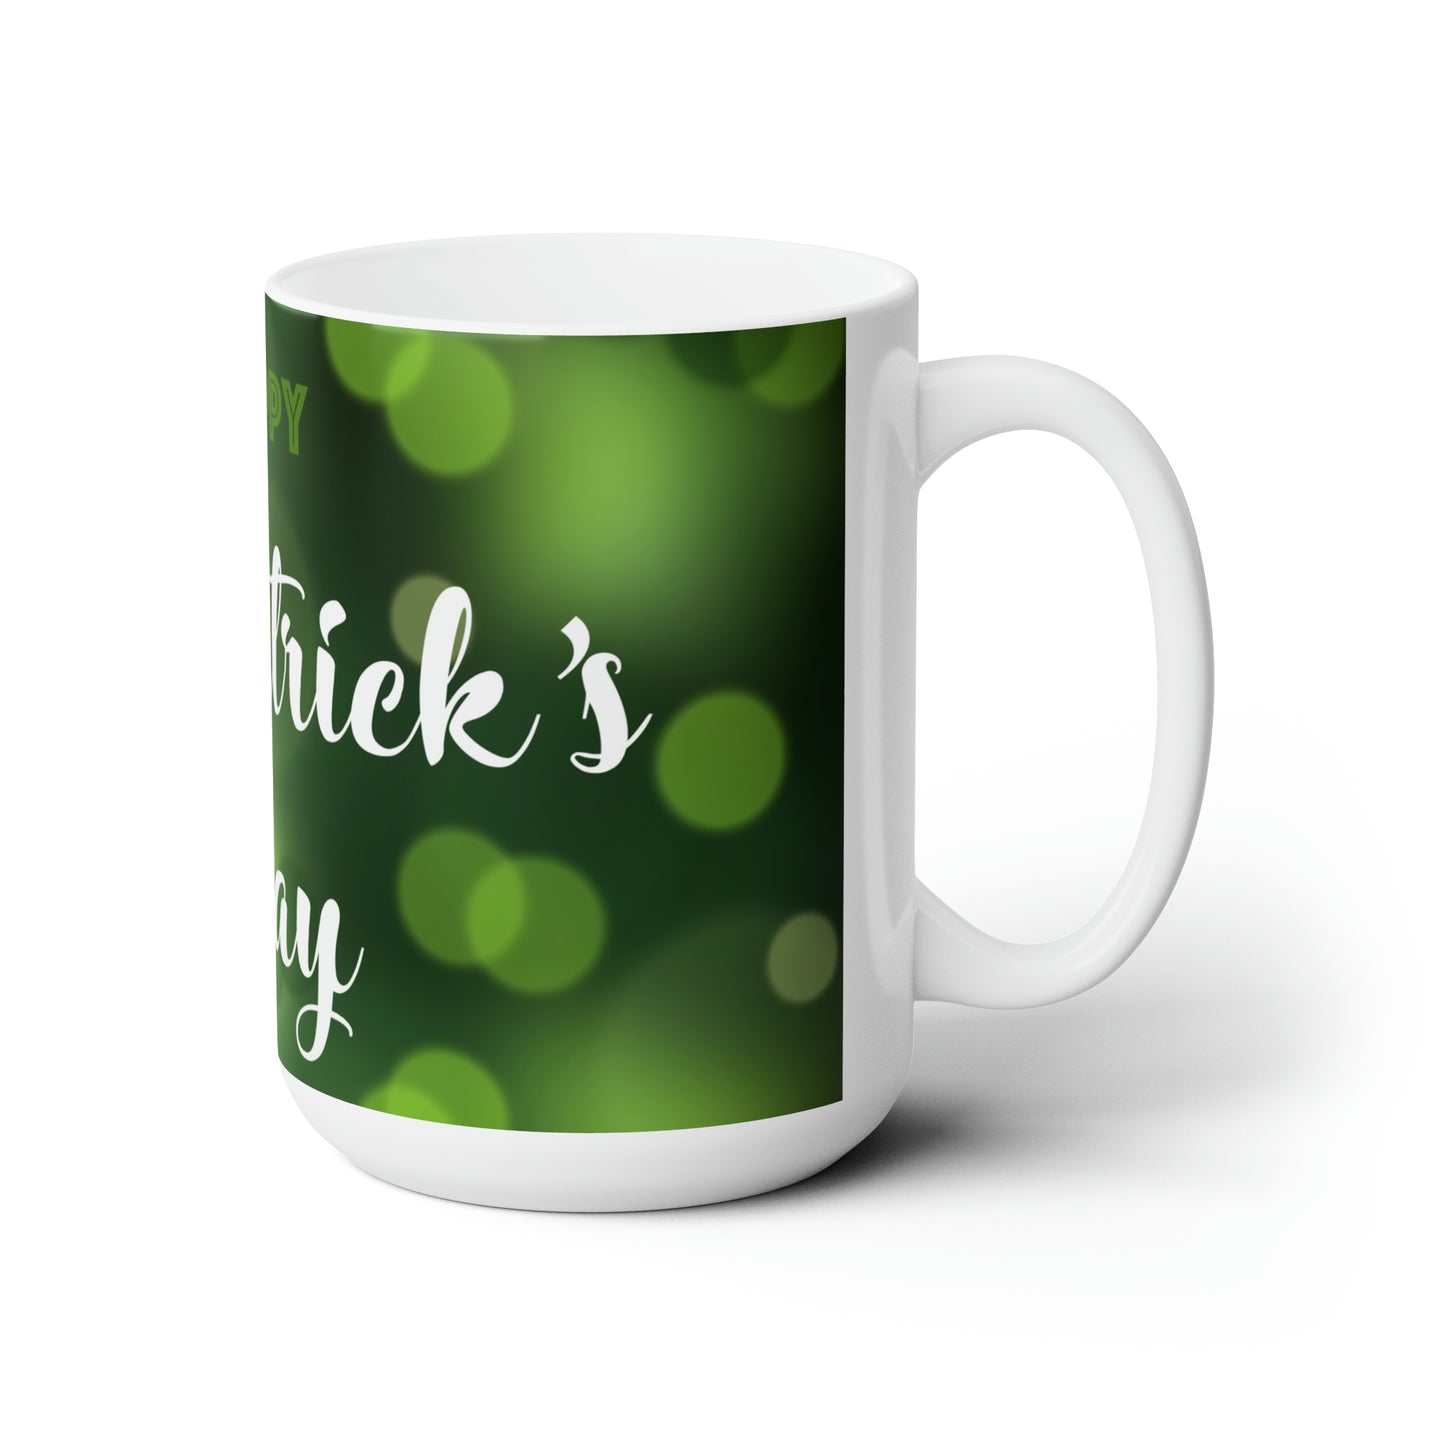 Green "Happy St Patrick's Day" Ceramic Mug 15oz, Microwave and Dishwasher Safe